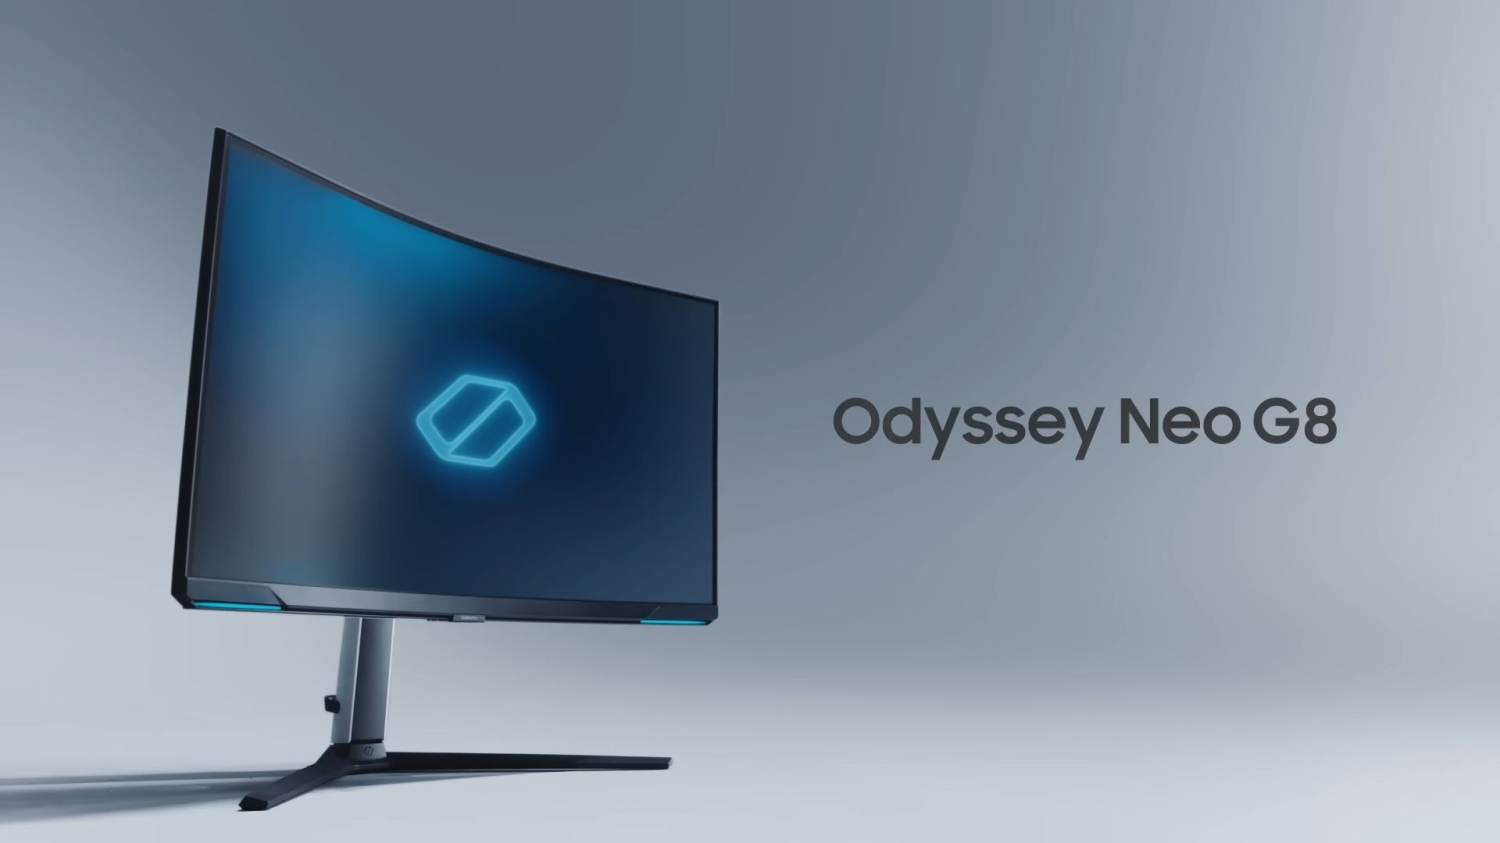 World's First 4K 240hz MiniLED Gaming Monitor! 🔥 [Samsung Odyssey Neo G8]  